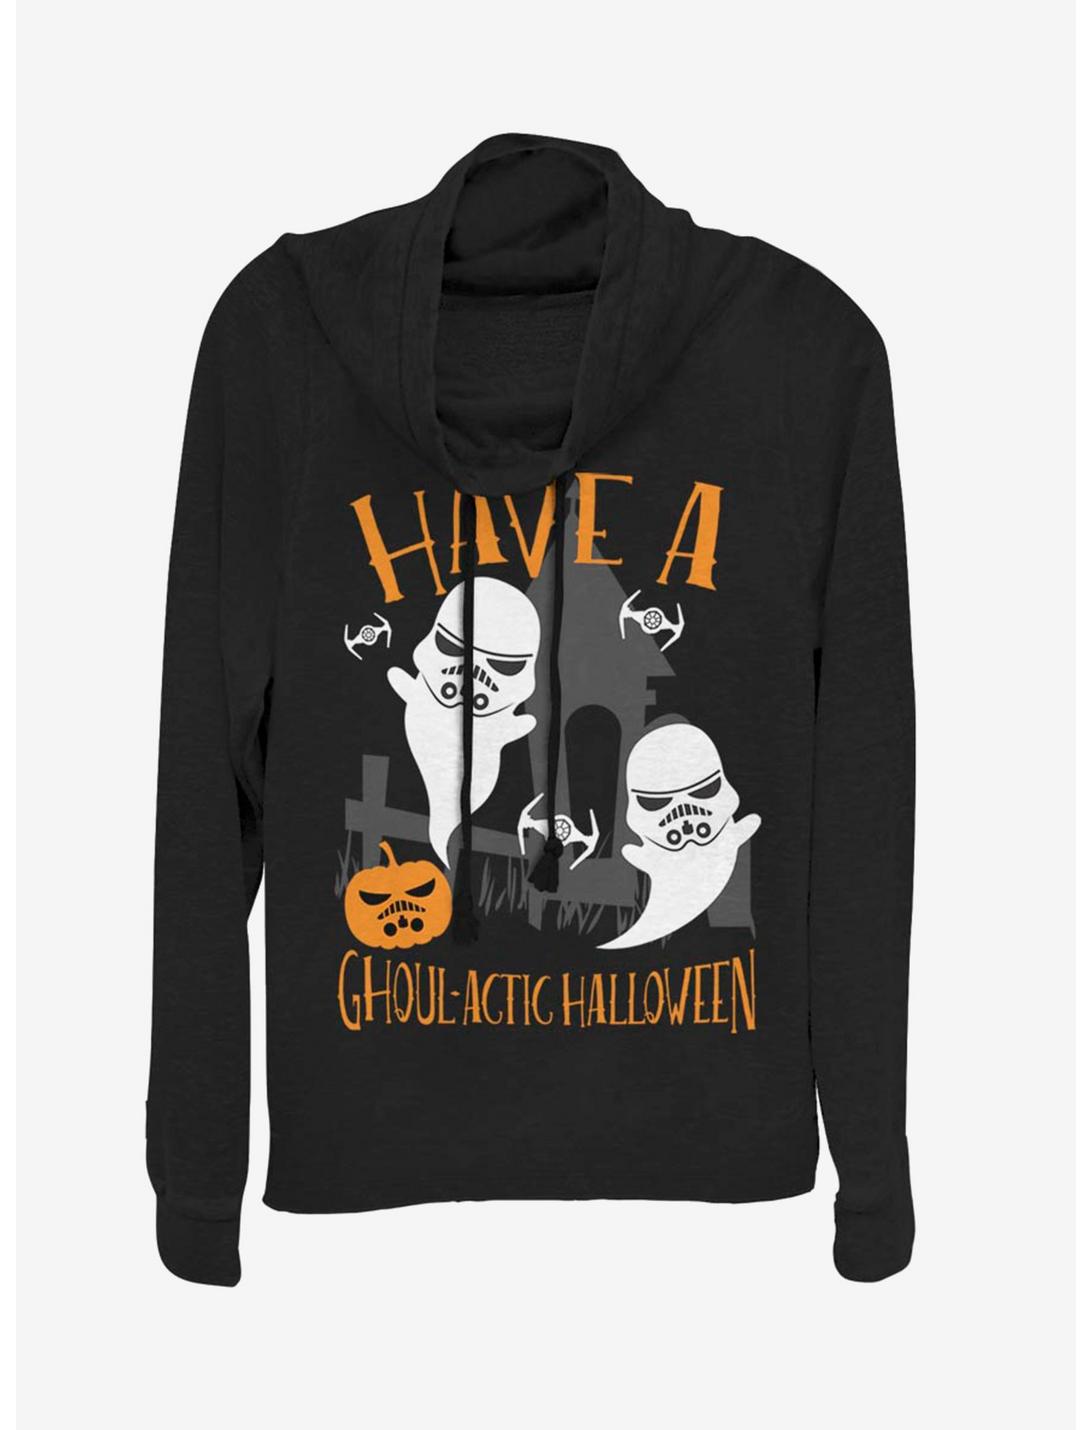 Star Wars Ghoulactic Halloween Cowl Neck Long-Sleeve Girls Top, BLACK, hi-res